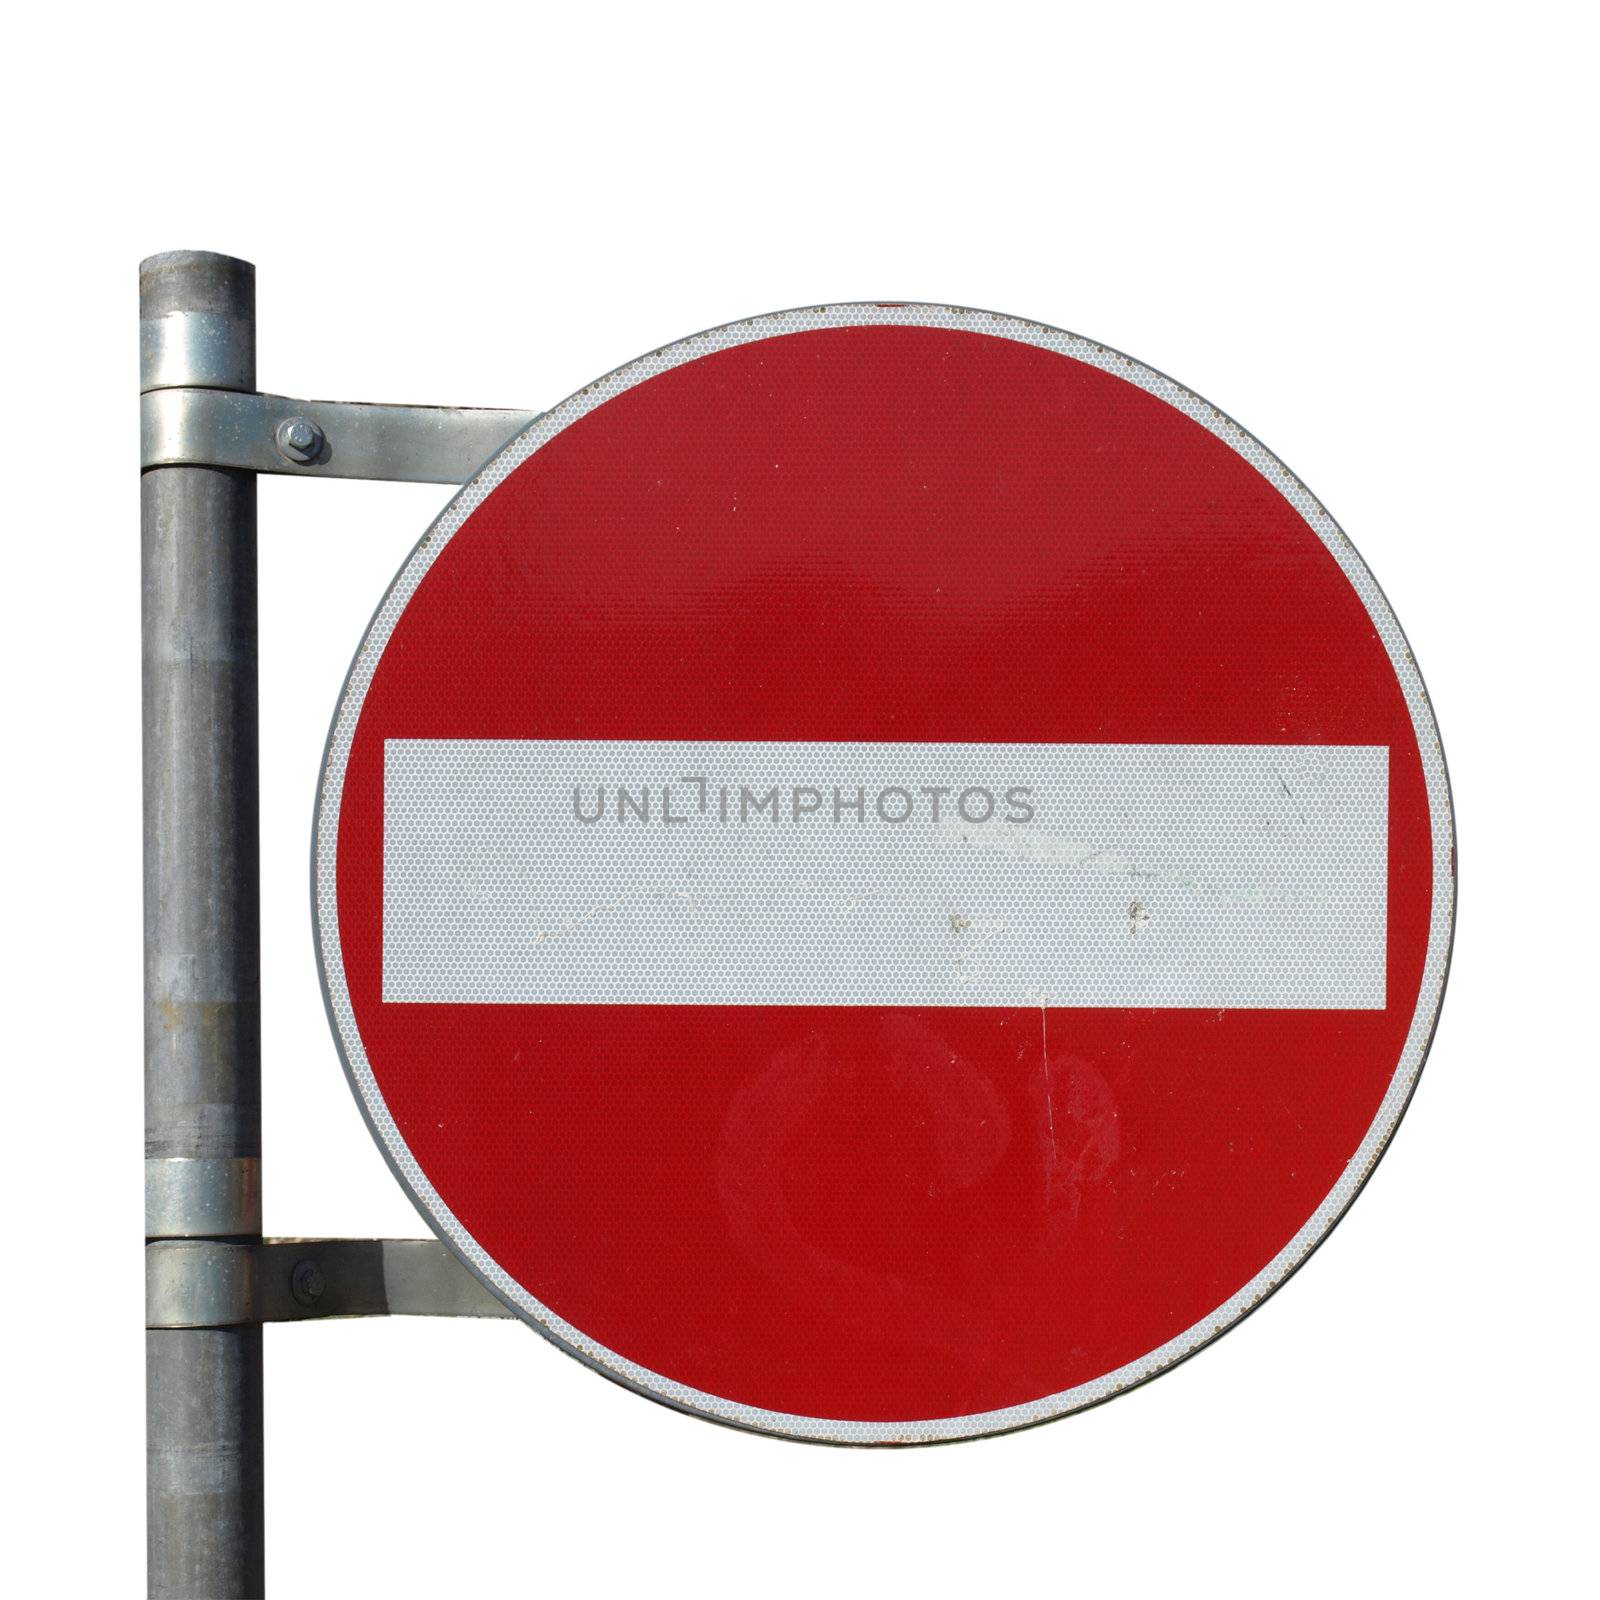 No entry sign by claudiodivizia